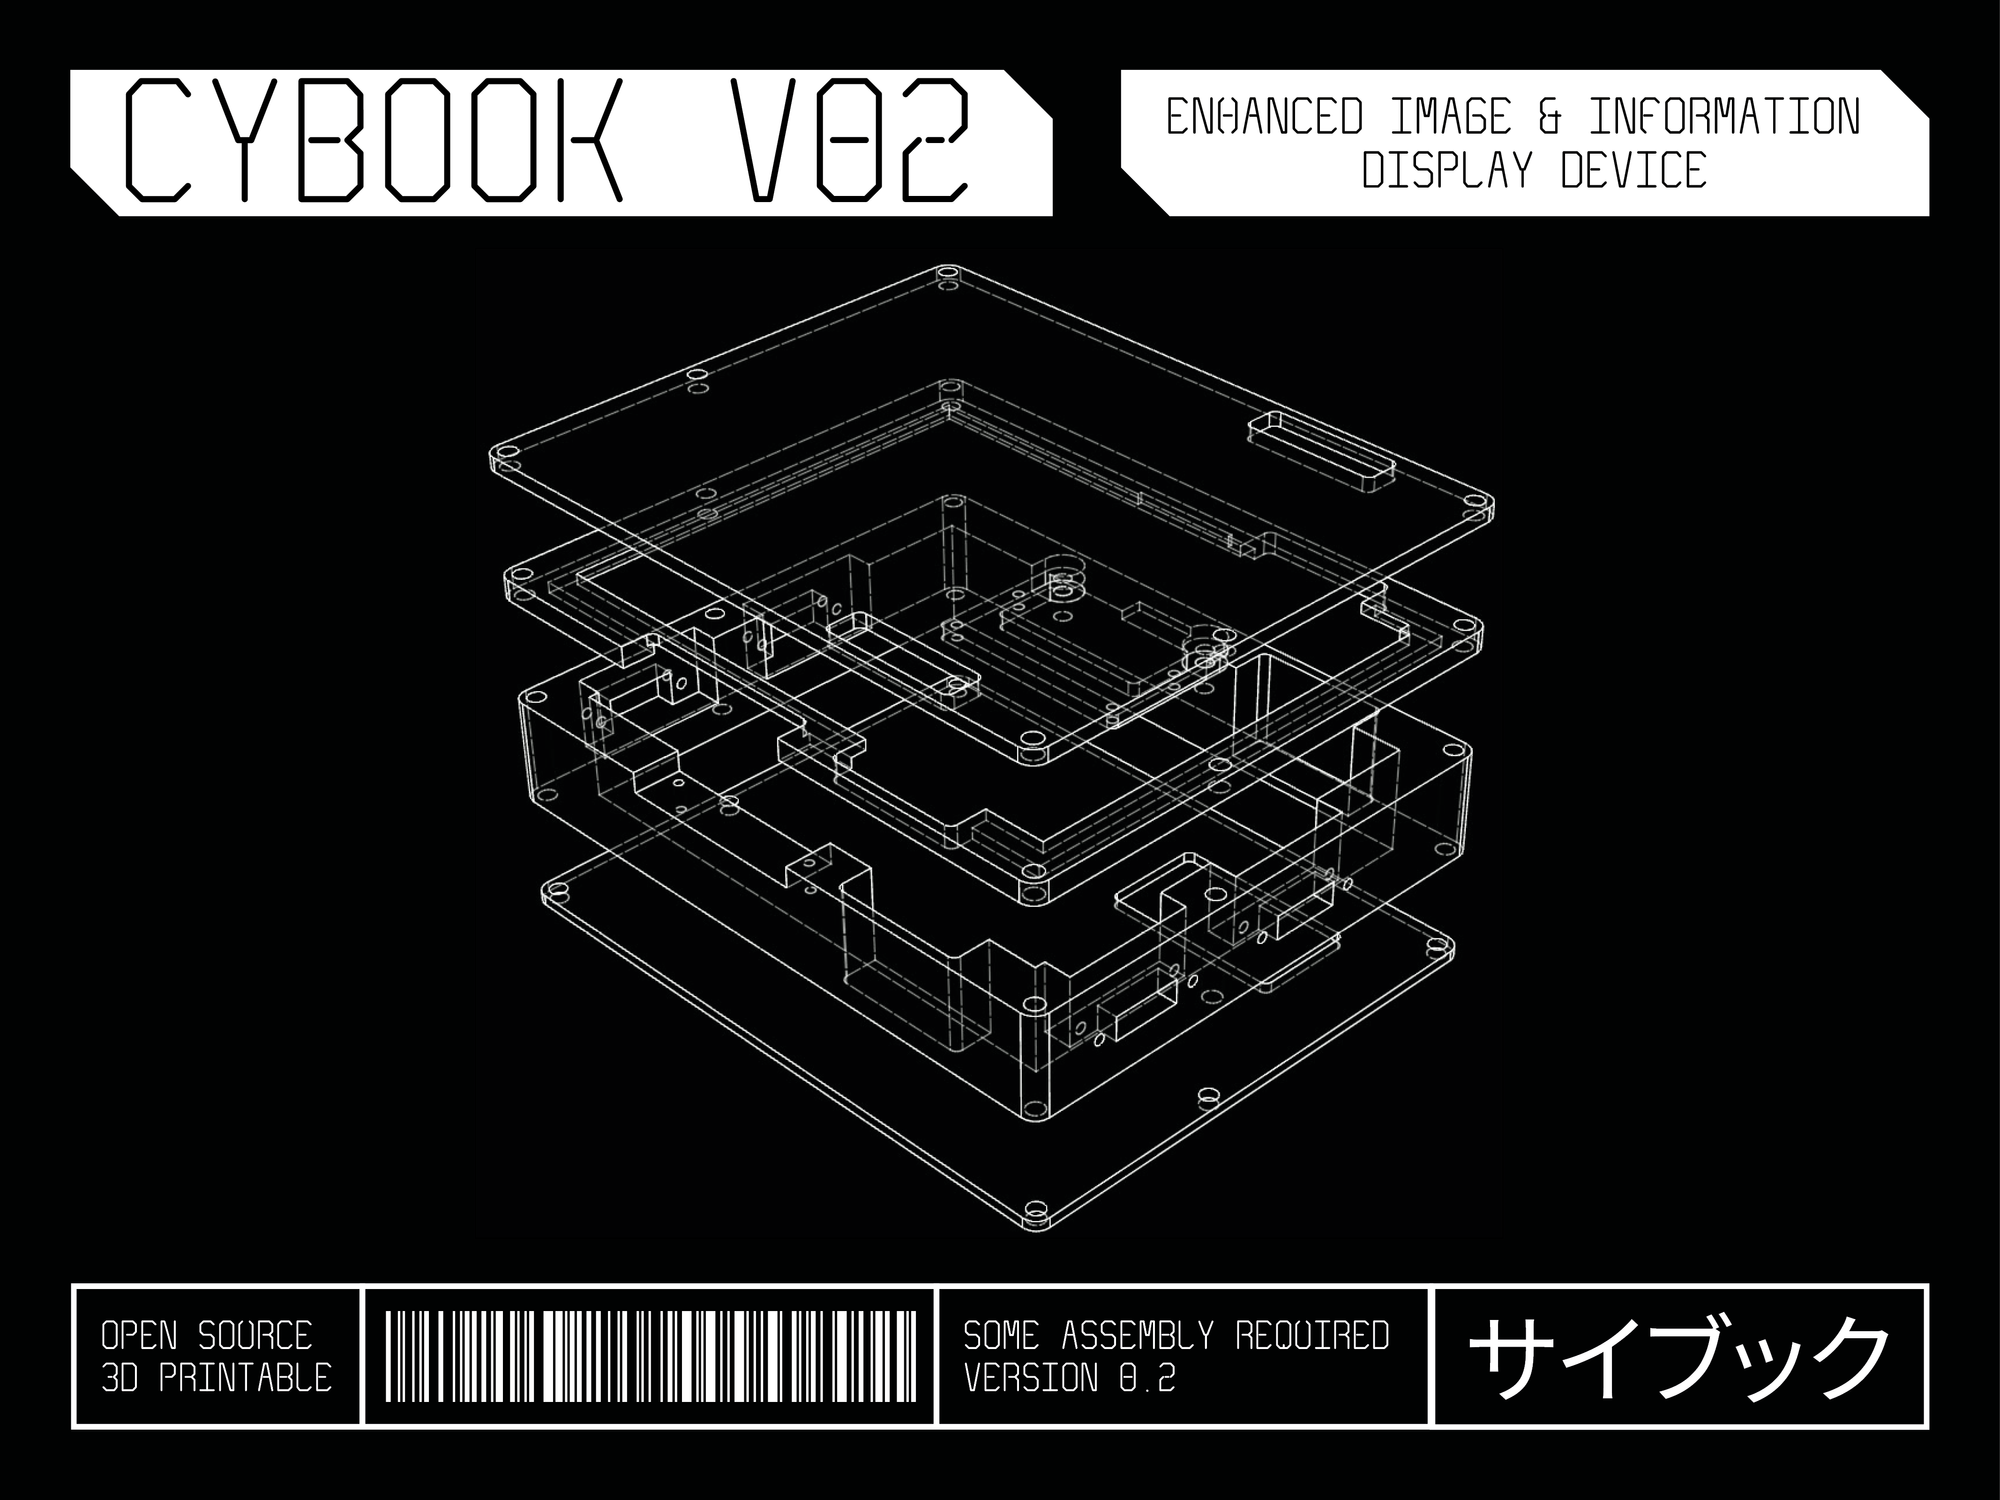 Cybook V02